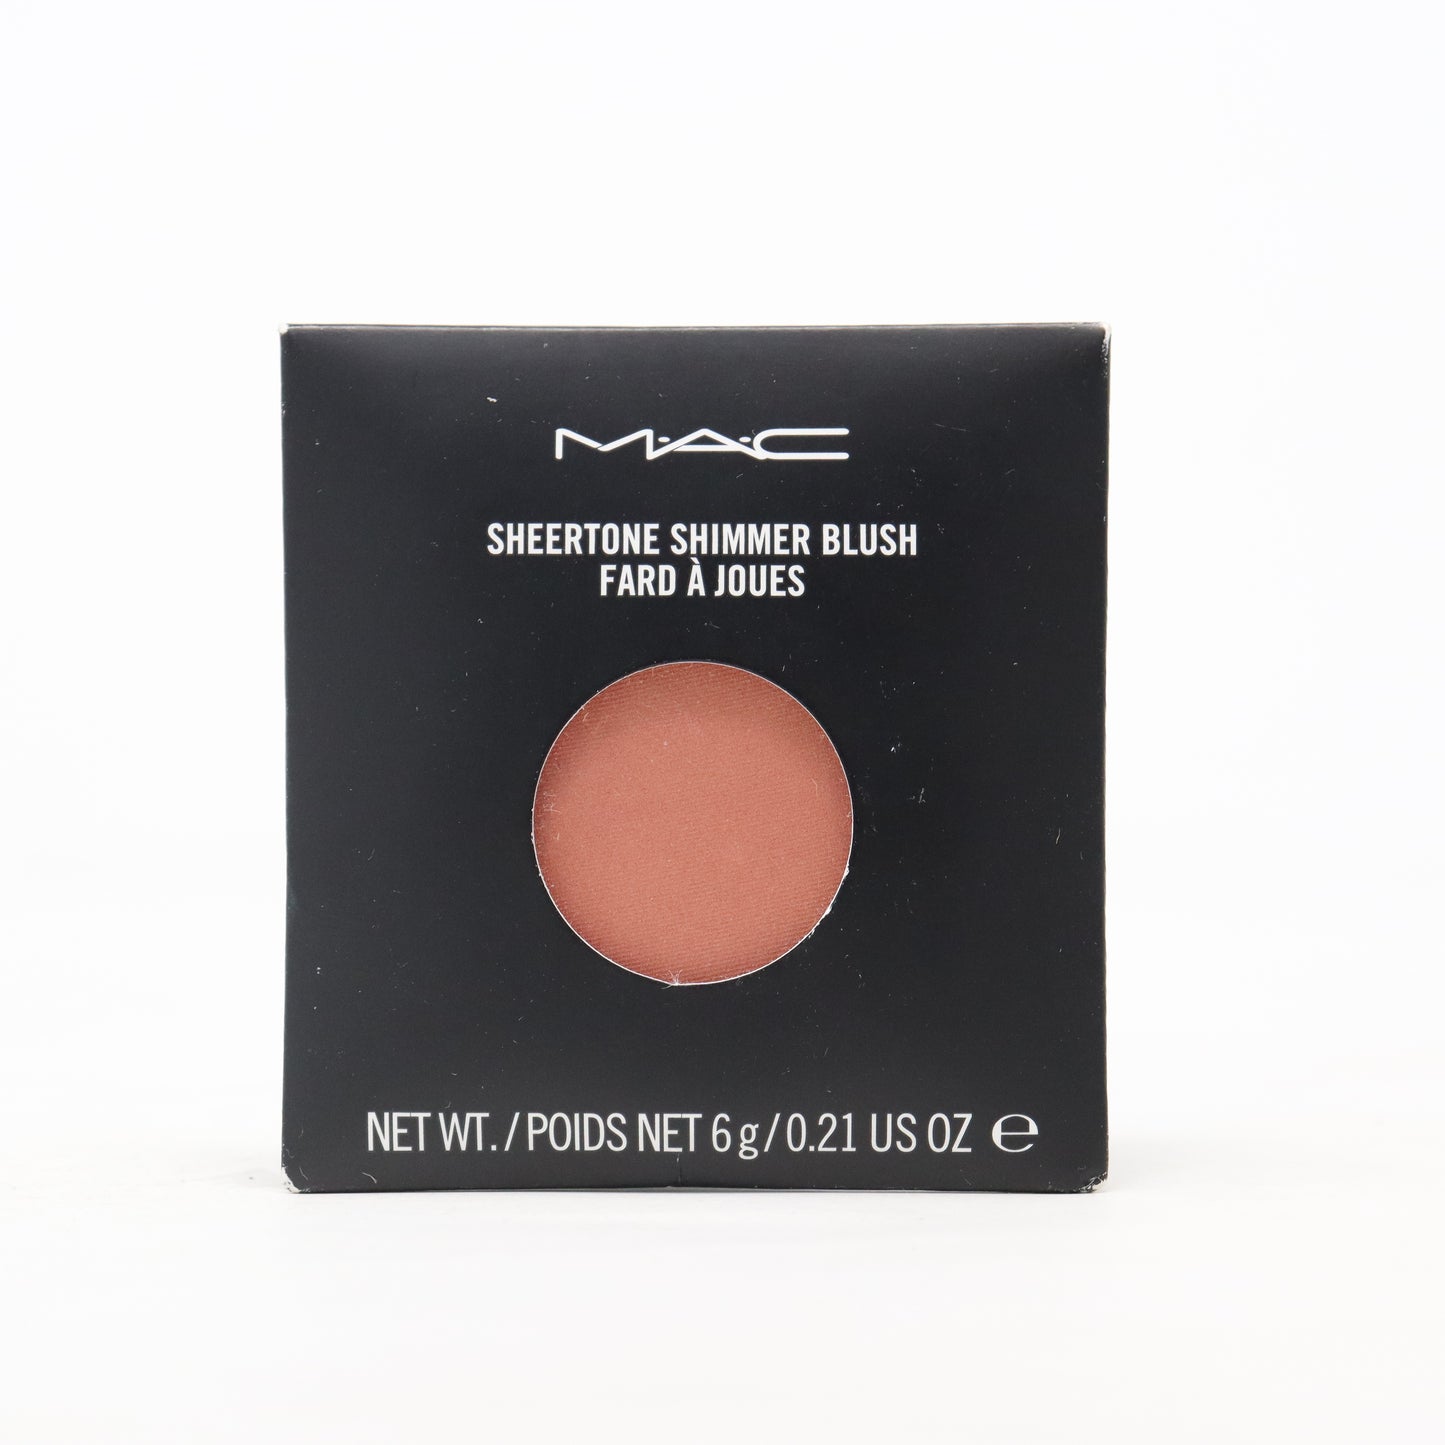 Sheertone Shimmer Blush Refill